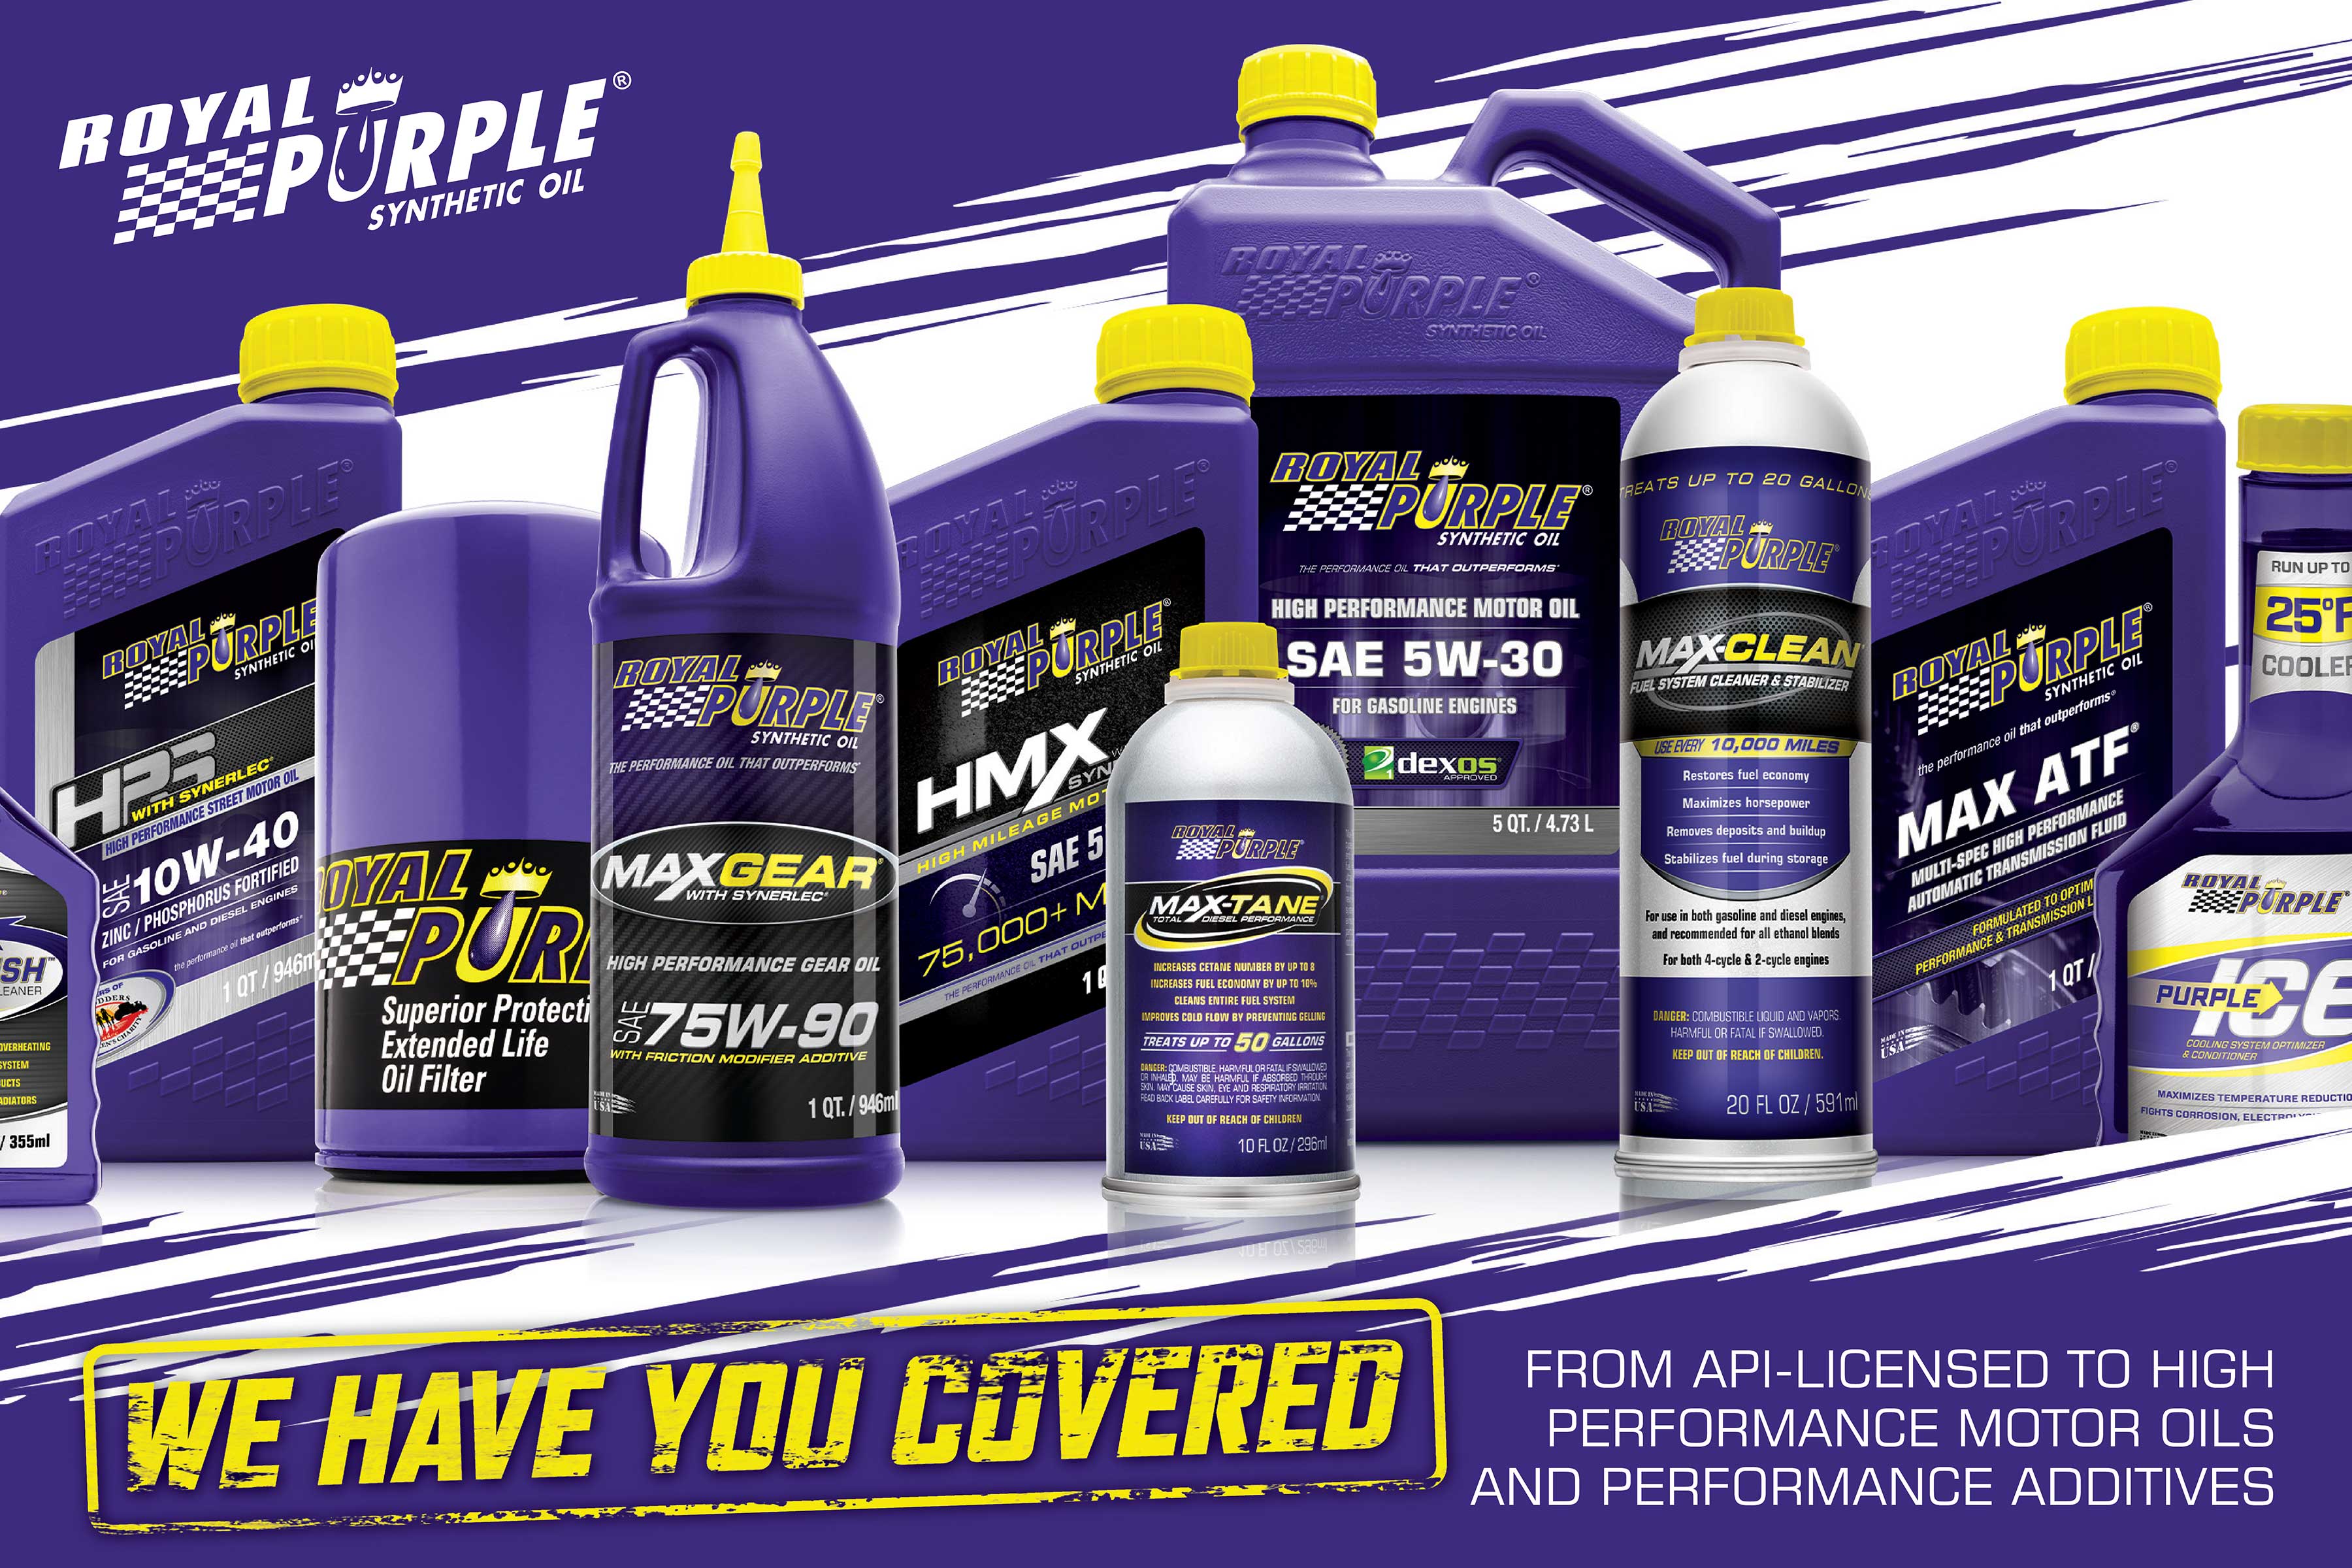 MAX ATF®  Royal Purple